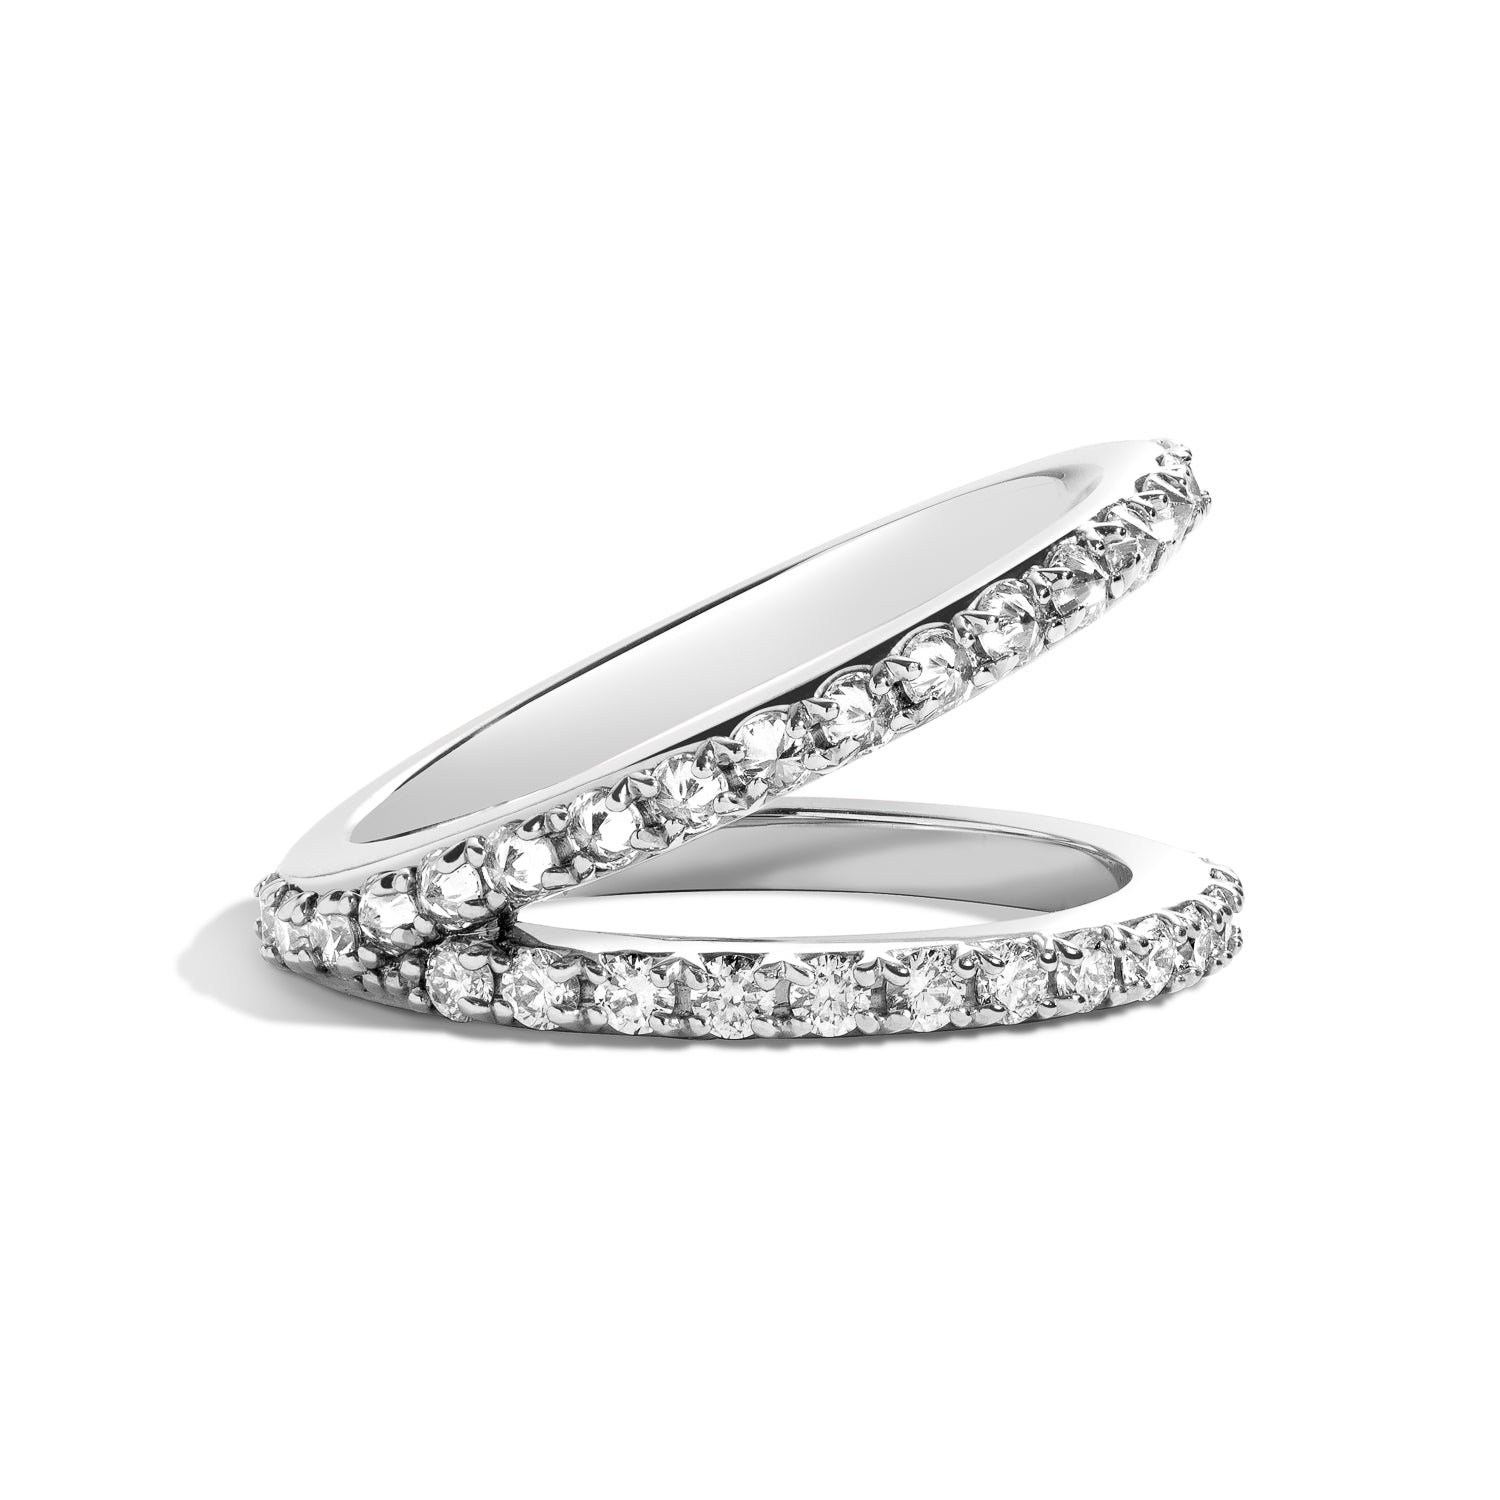 Shahla Karimi Jewelry Love V Ring w/ Inverted Diamond Pave 14K White Gold